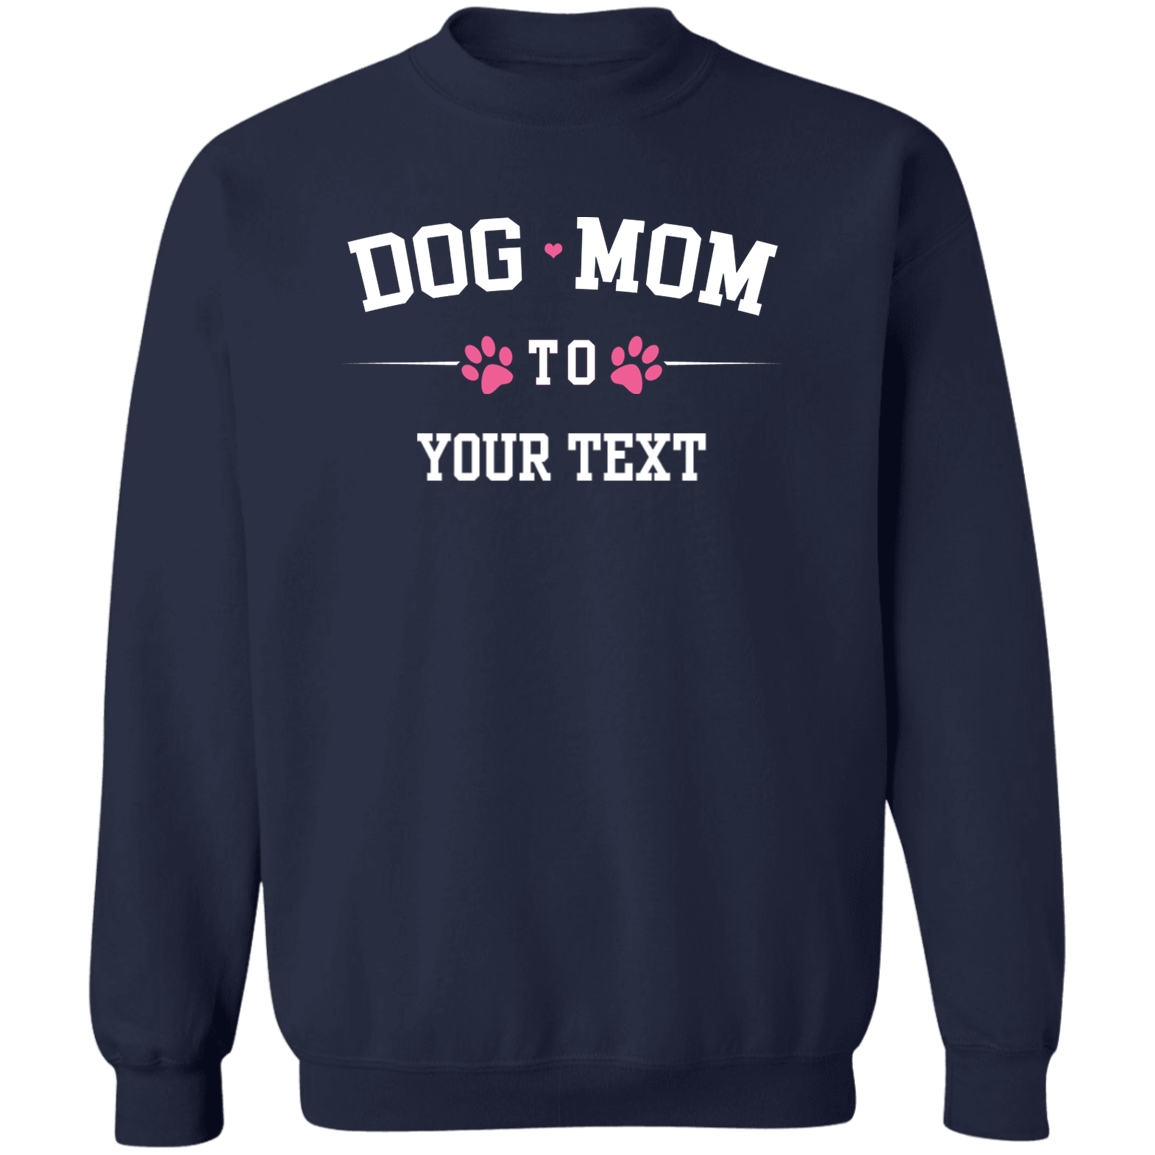 Personalized Dog Mom To - Sweatshirt.